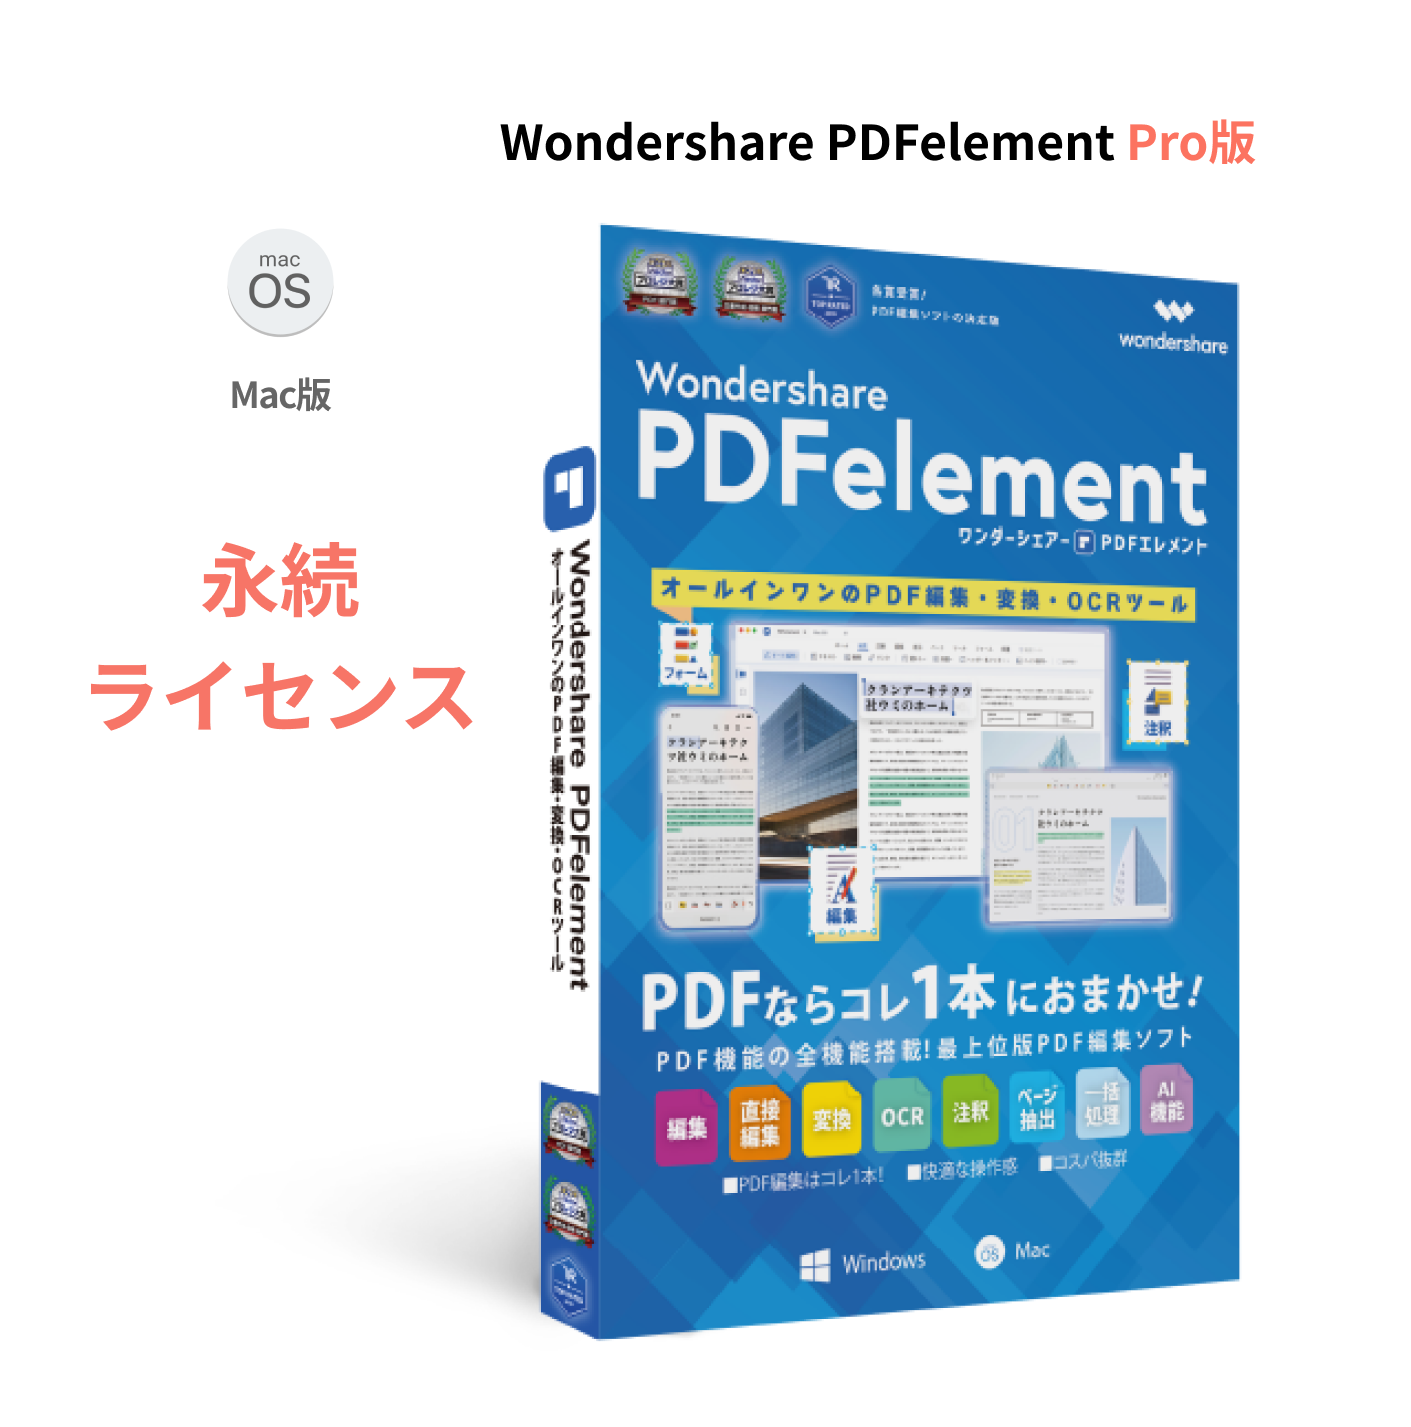 Wondershare PDFelement 10 Pro（Mac版）永続ライセンス PDF編集ソフト OCR PDF変換 PDF作成 All-in-oneのPDF万能ソフト